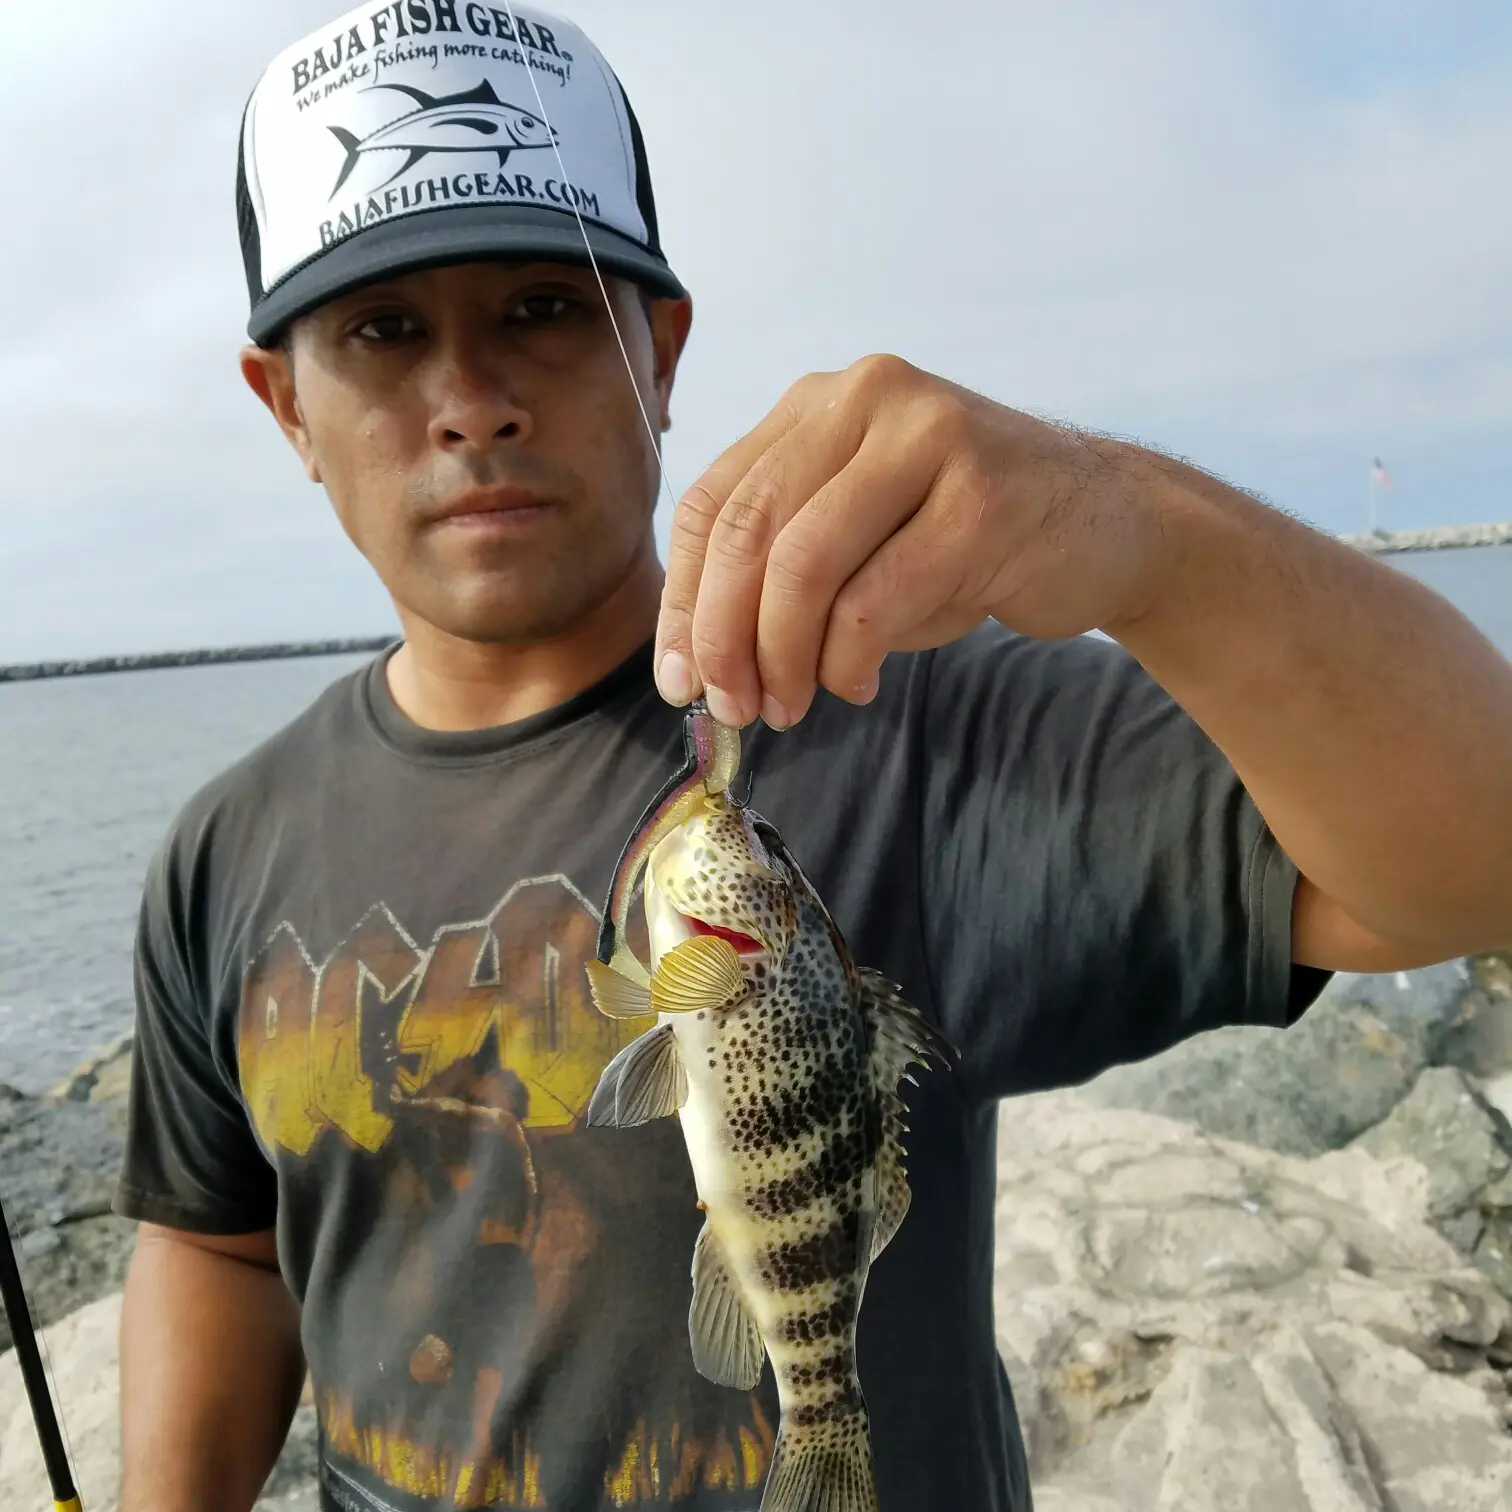 Baja Fish Gear